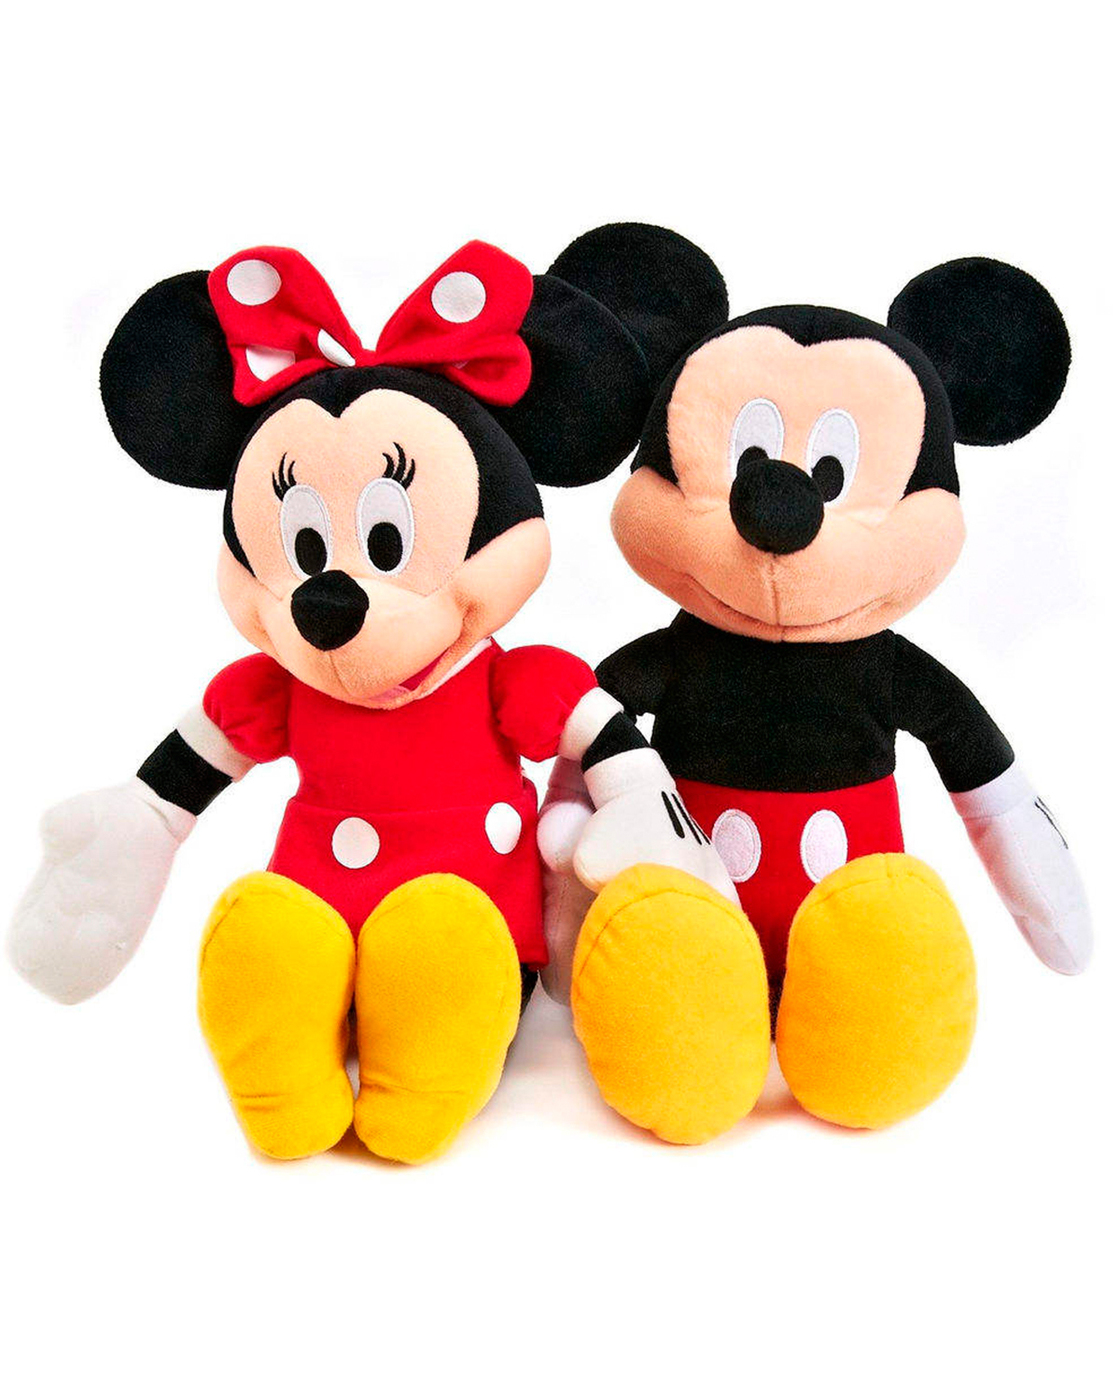 Мягкие игрушки Микки и Минни Маус Mickey Minnie Mouse, 2 шт. 35 см зубная щетка oral b kids mickey mouse микки маус от 2 до 4 лет мягкая розовая